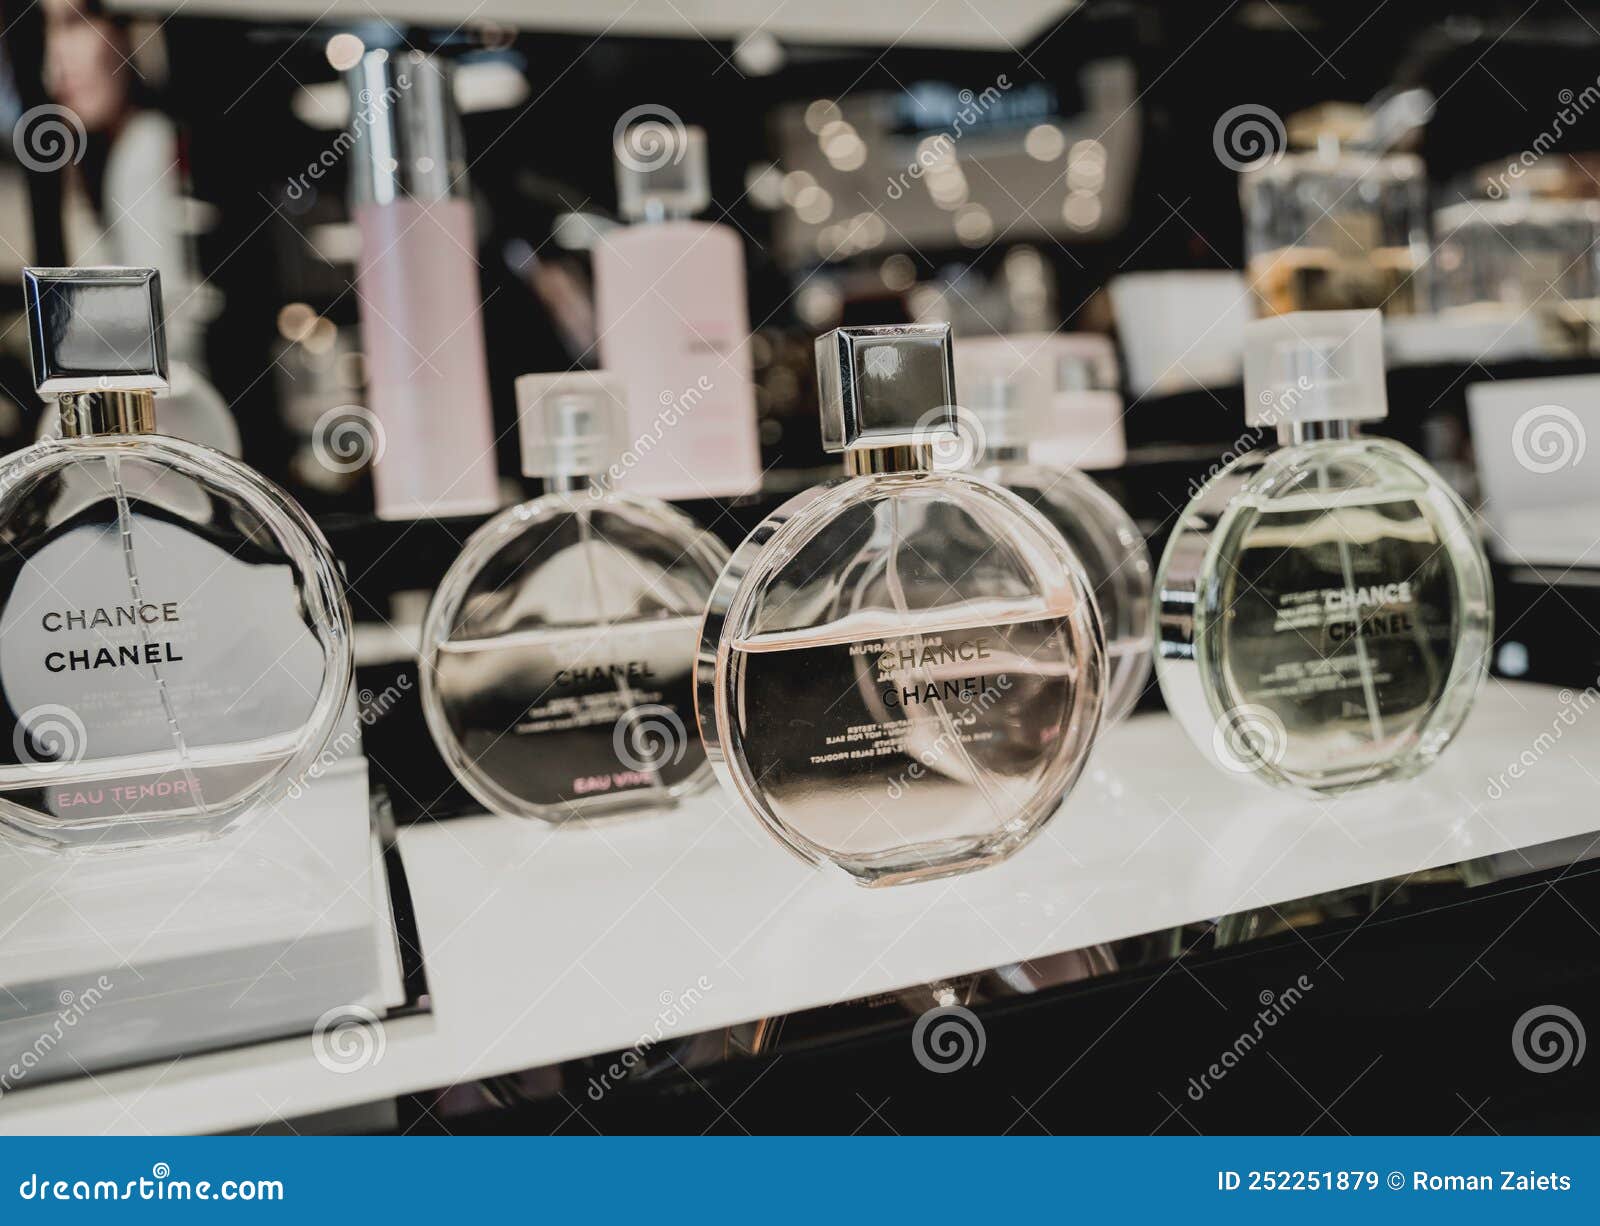 Phuket Thailand May 2022 Rows Chanel Brand Perfumes Case Supermarket –  Stock Editorial Photo © Romaset #581901186